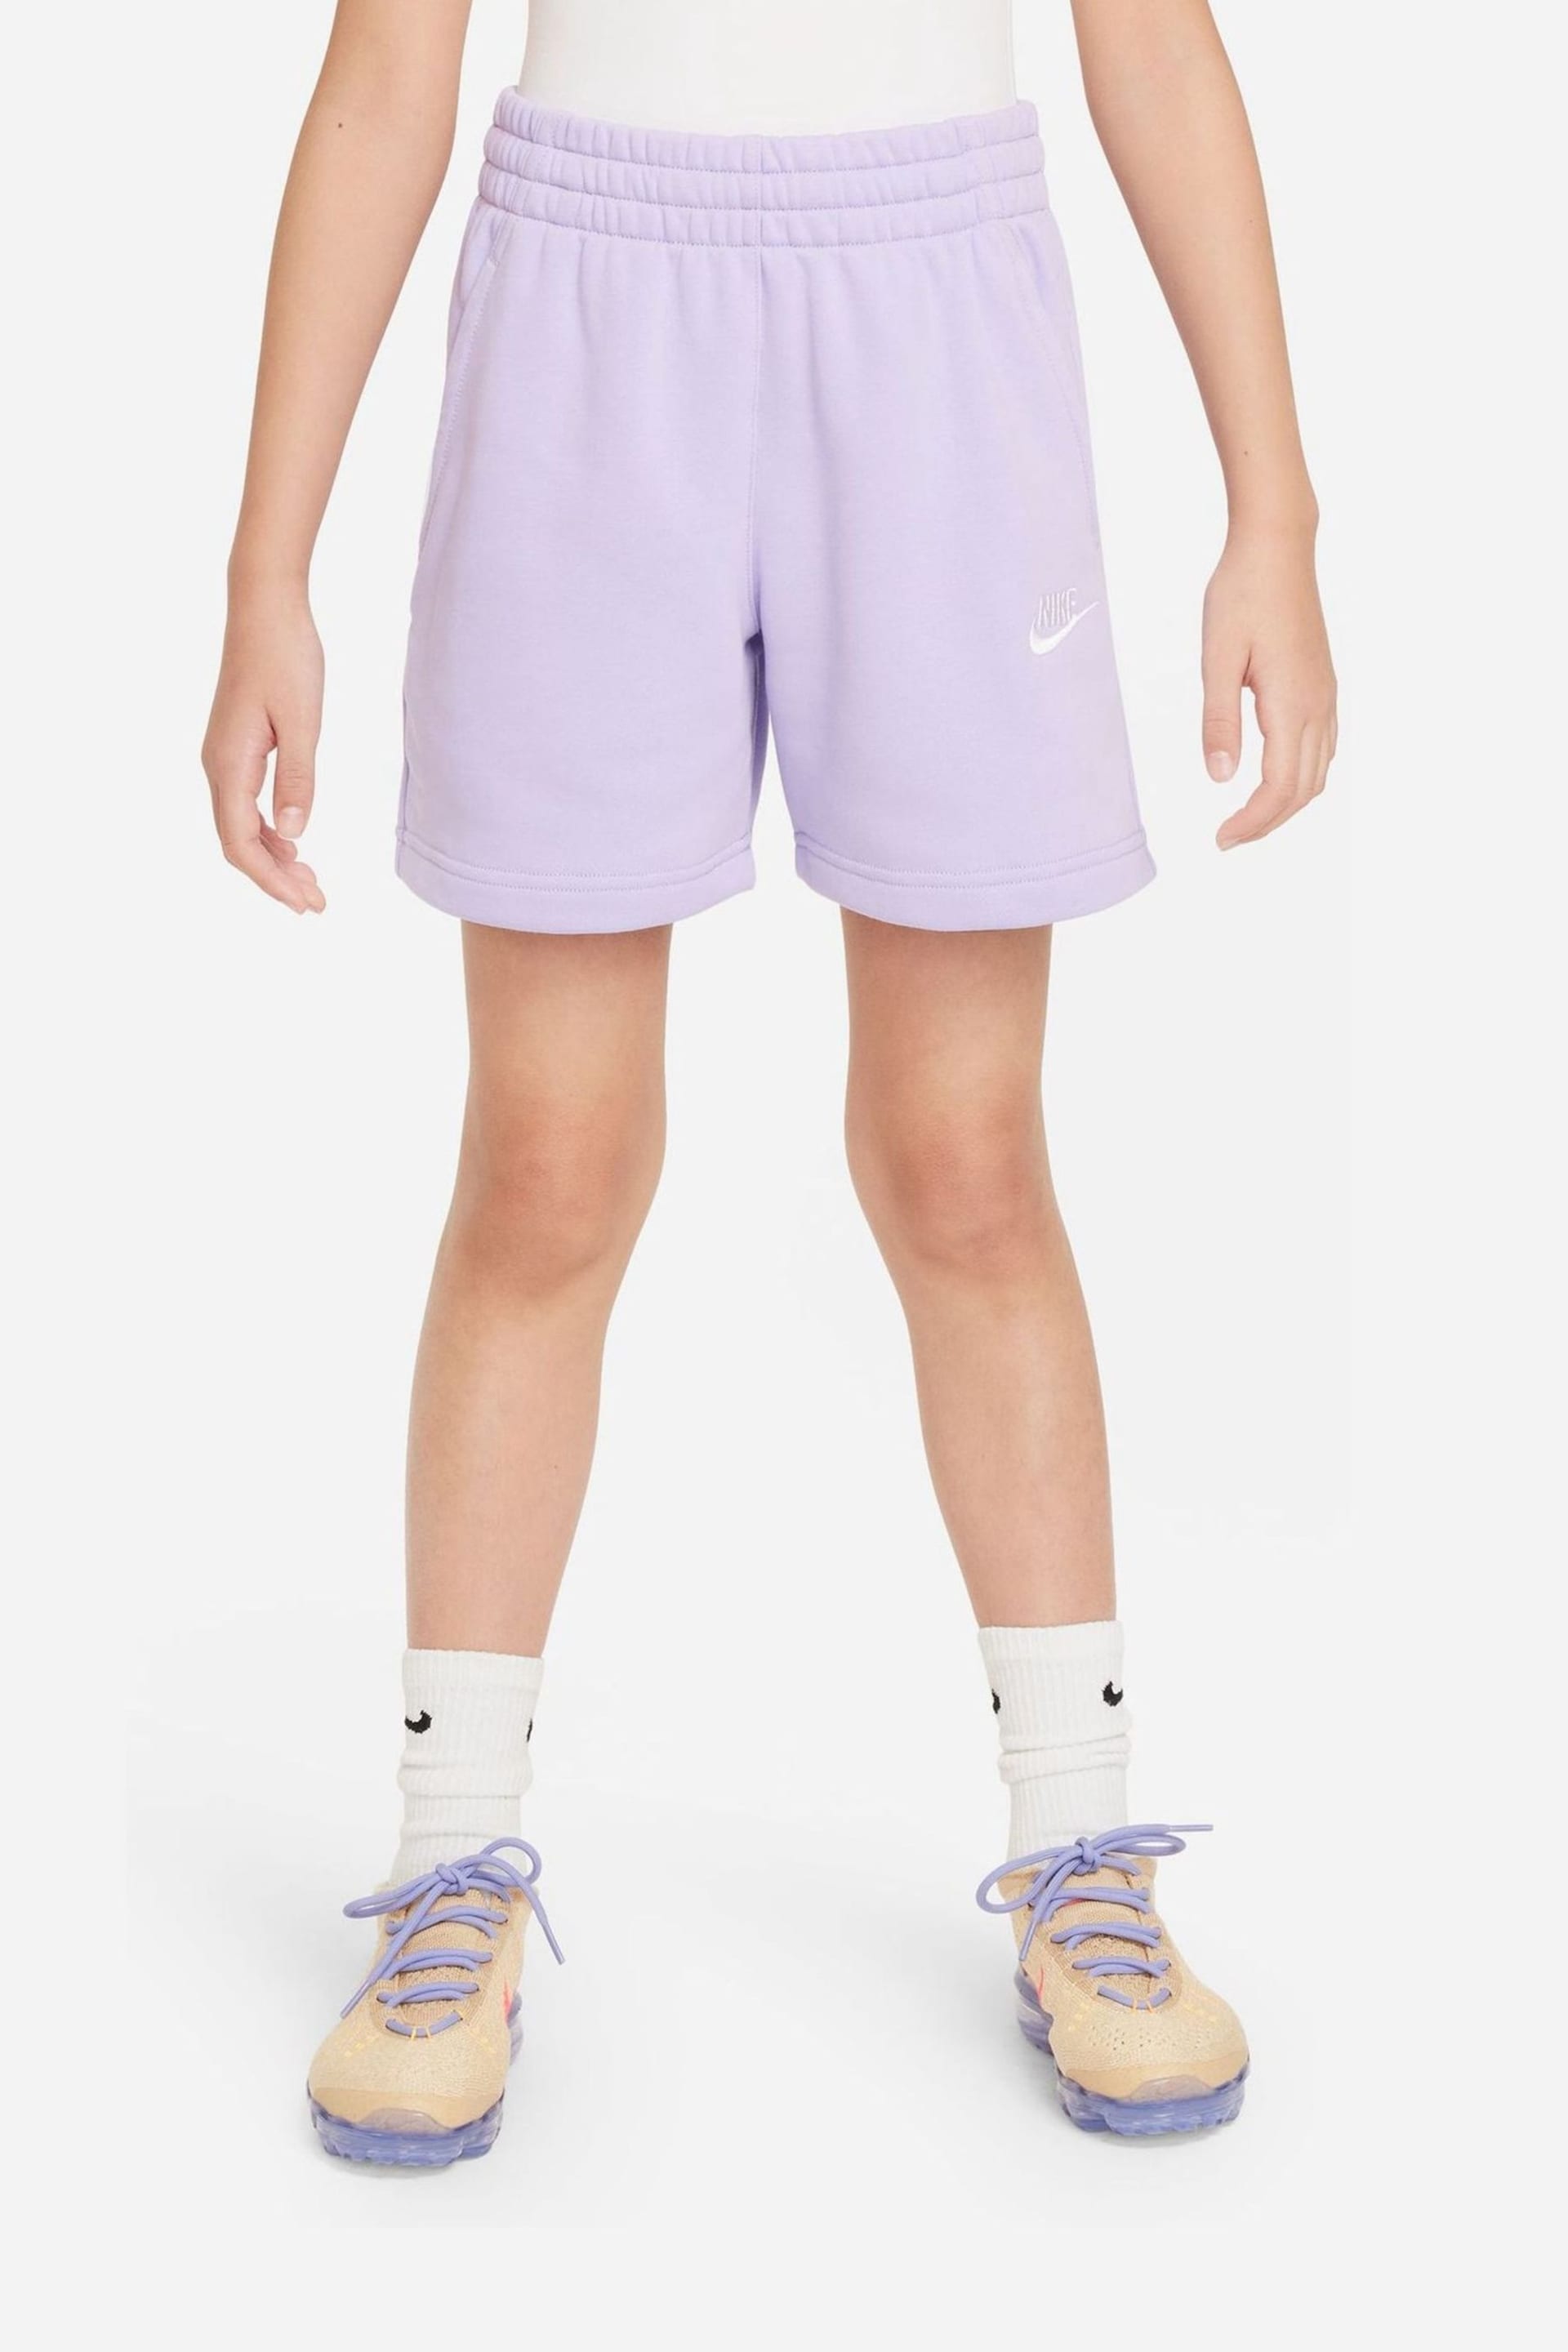 Nike Purple Club Fleece Shorts - Image 1 of 6